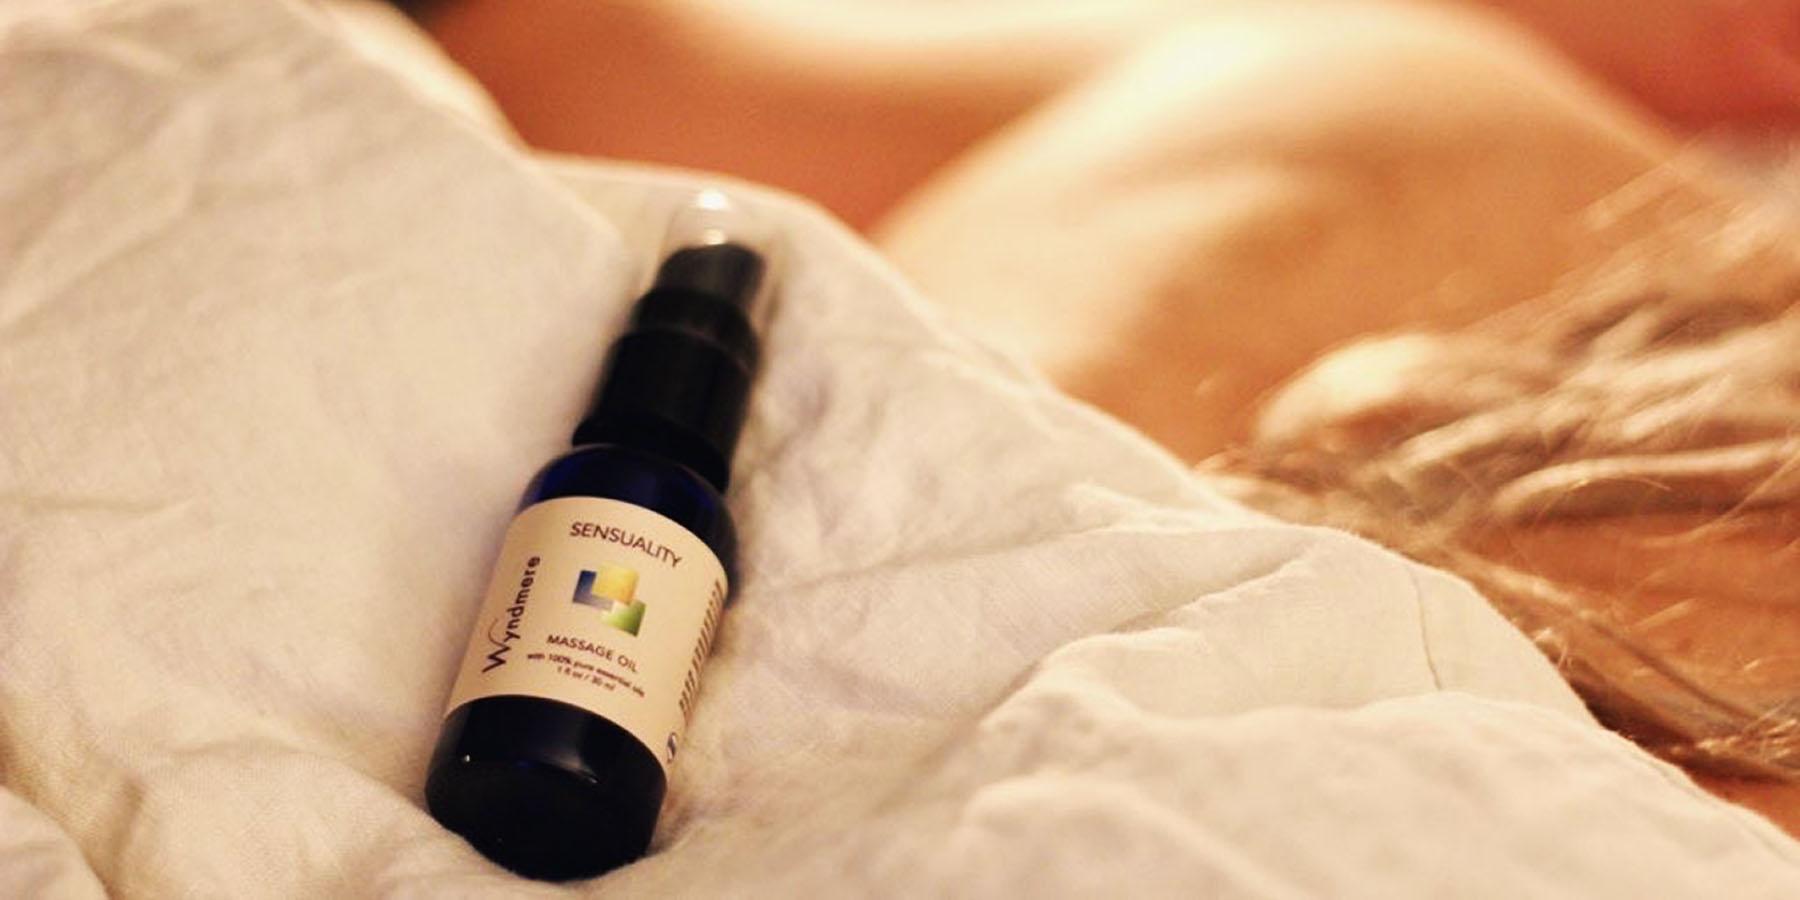 Sensuality Massage Oil - Wyndmere Naturals